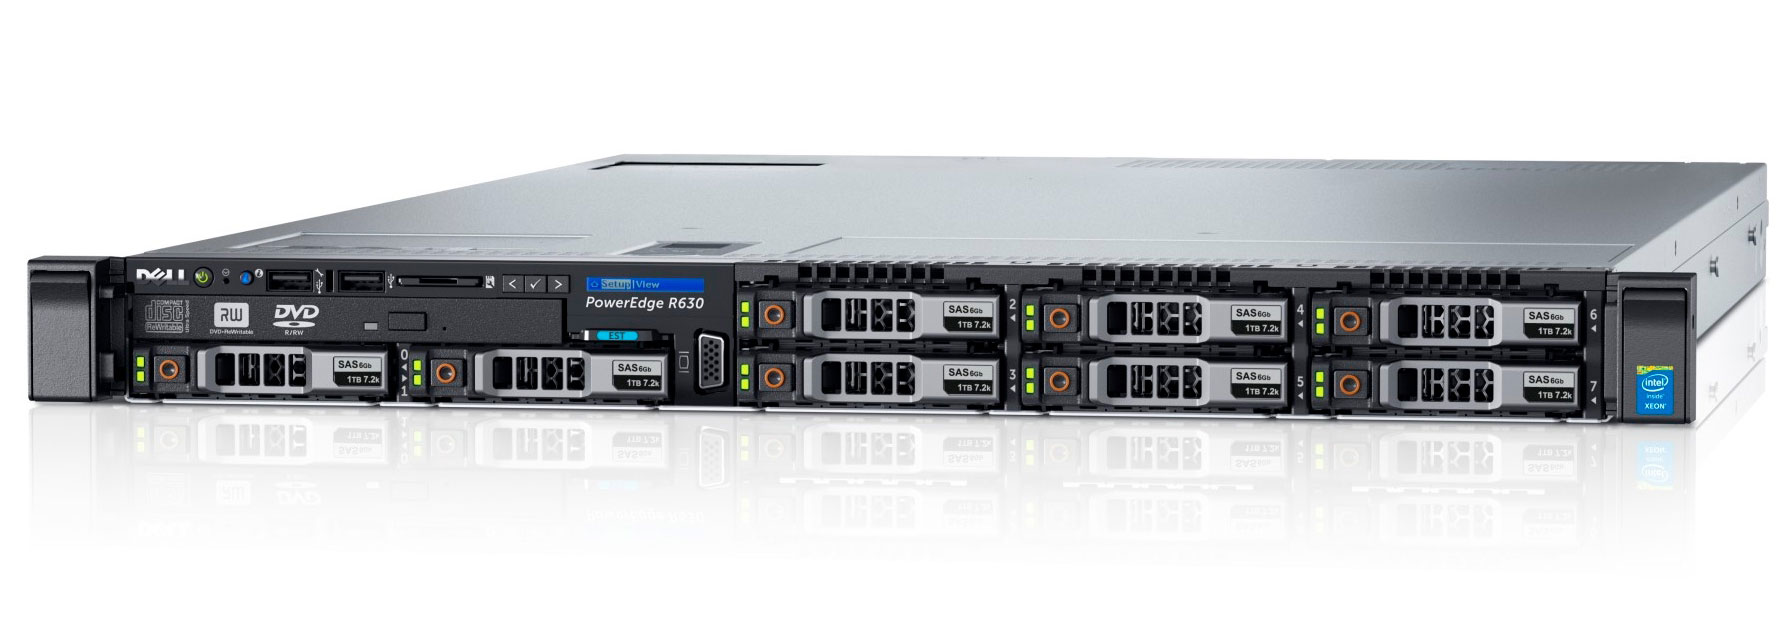 Подробное фото Сервер DELL PowerEdge R630 Xeon 2x E5-2683v4 192Gb DDR4 2133P 8x noHDD 2.5", SAS RAID Perc H730, 1024Mb, DVD, 2*PSU